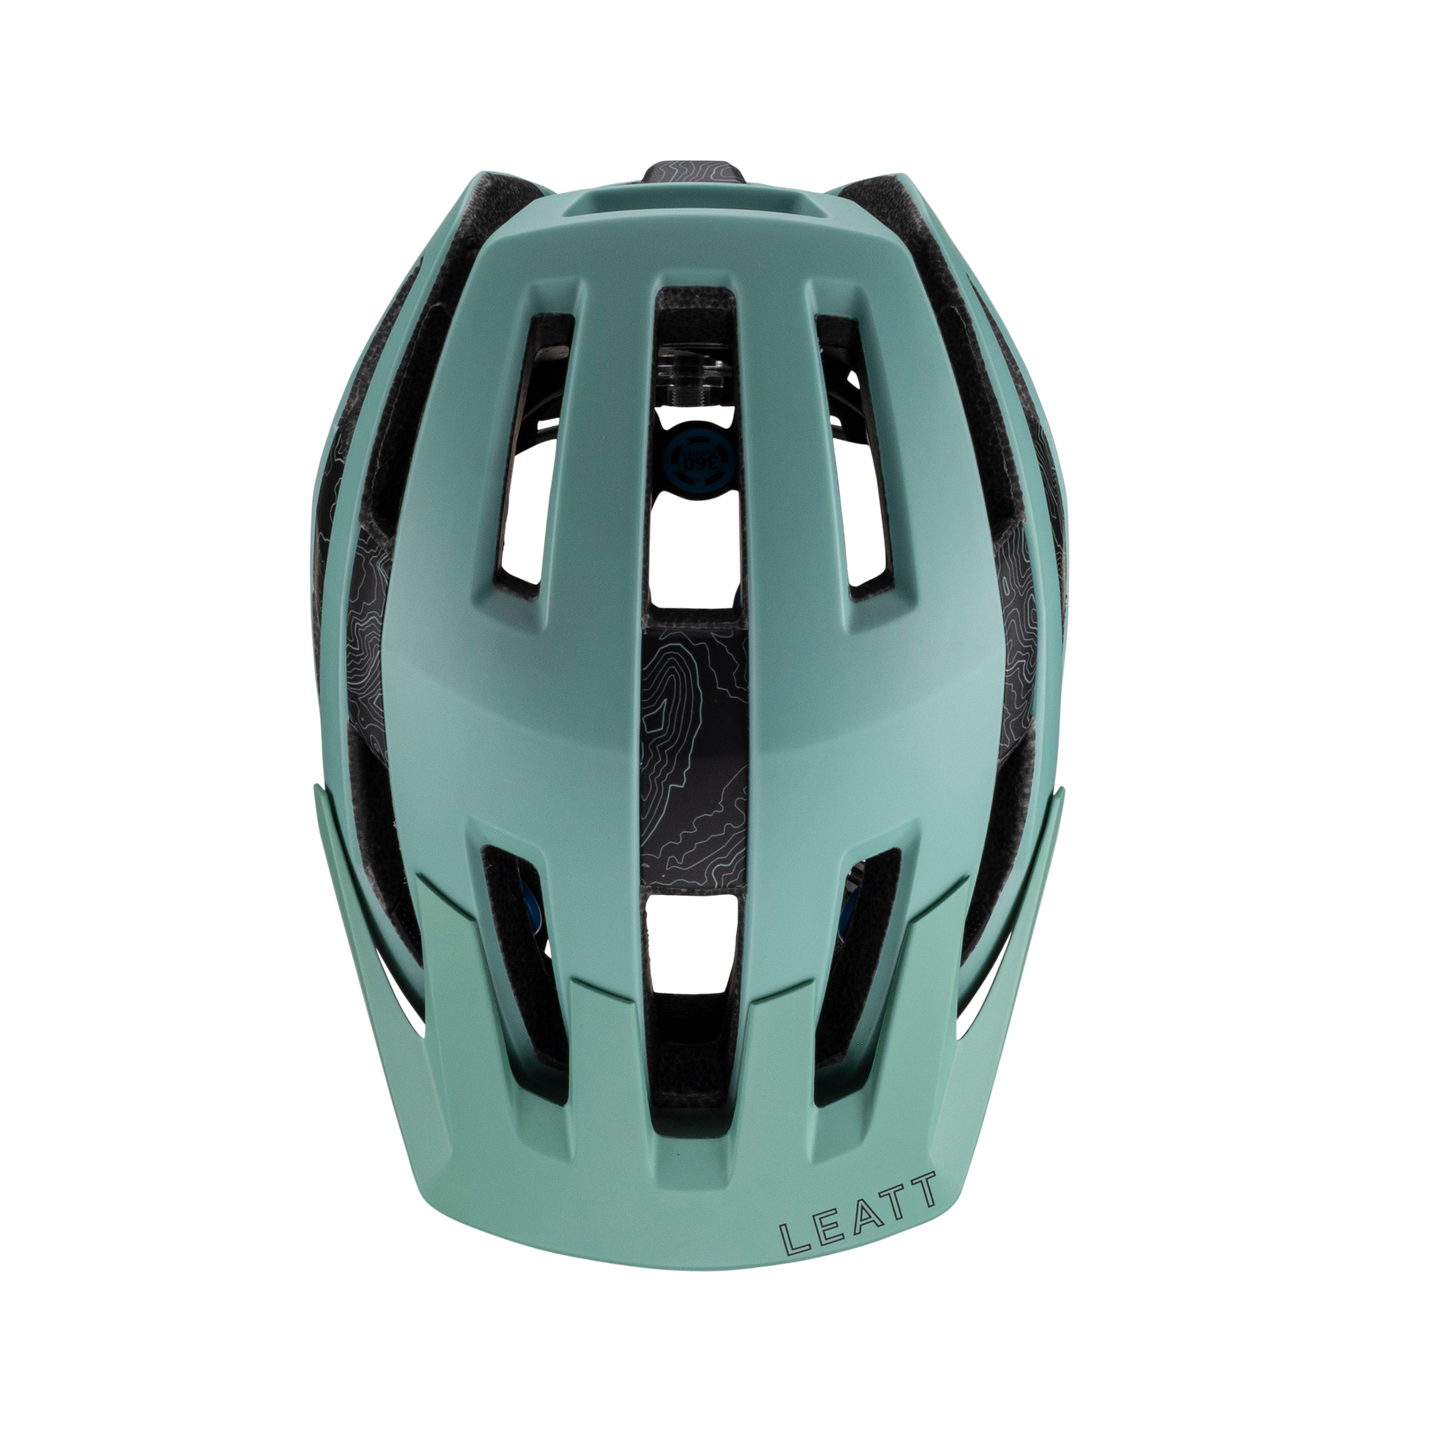 Helmet MTB Trail 3.0  - Pistachio